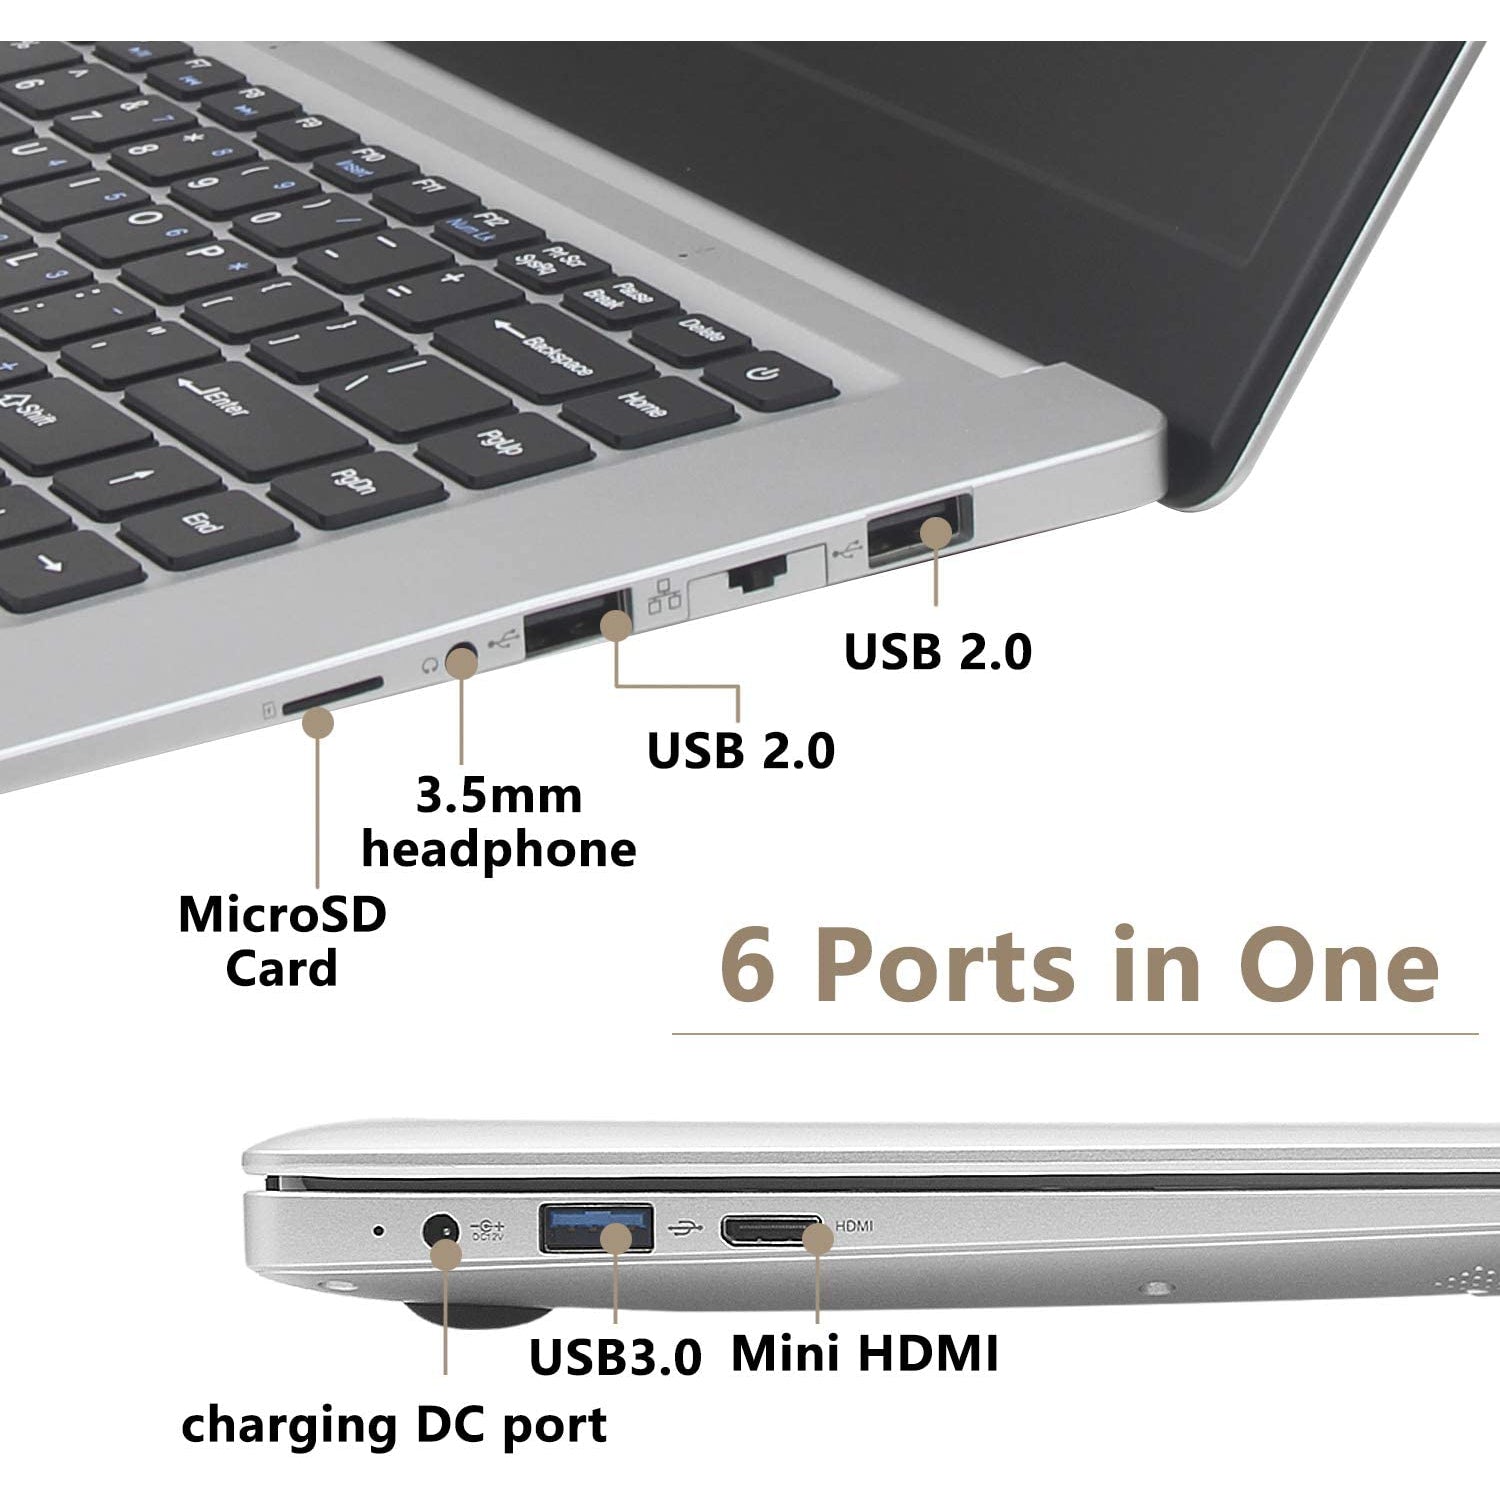 Laptop 15.6-inch 8GB Ram, 128GB / 256GB SSD, Intel Celeron J3455 Quad-core CPU, Windows 10 - Silver